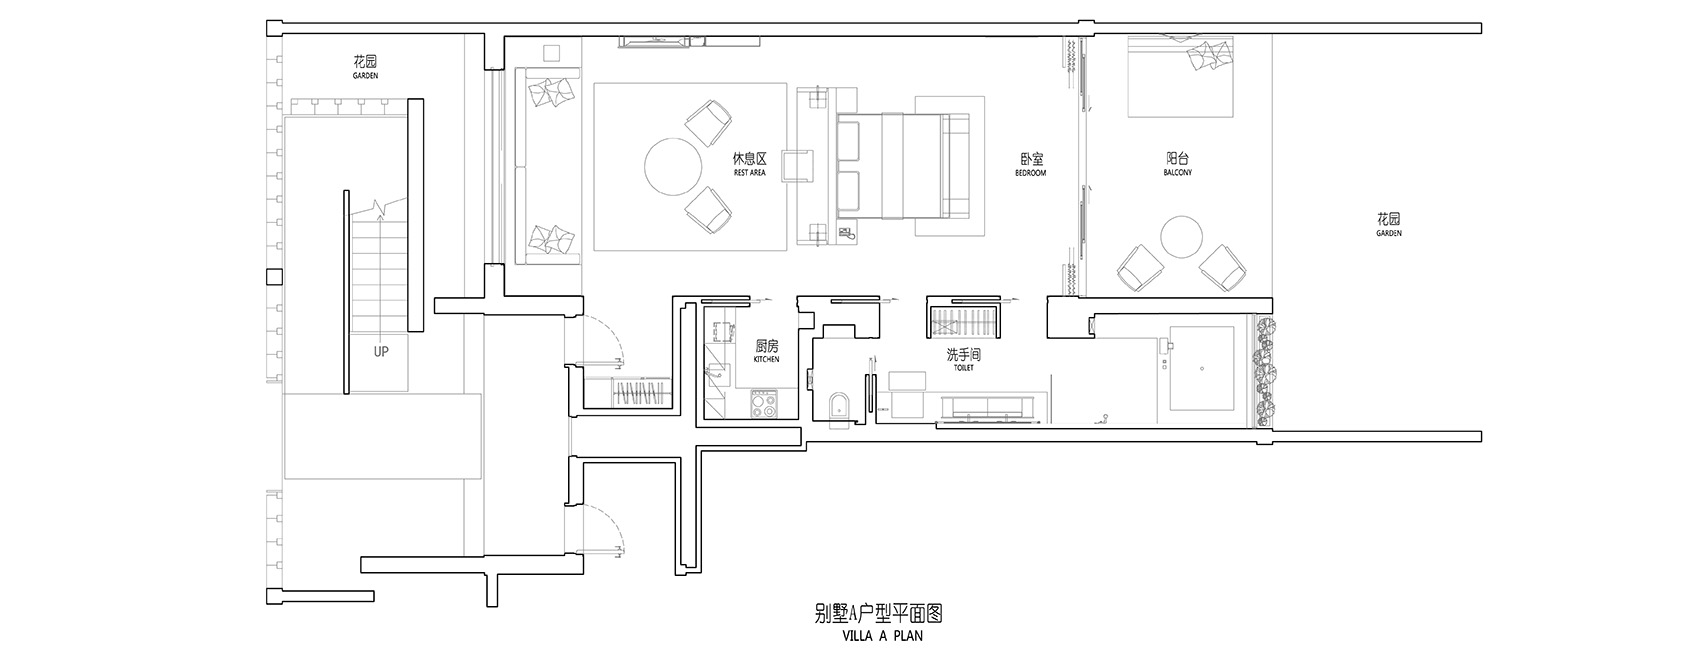 110-Interior-Design-of-Alila-Yangshuo-China-by-Horizontal-Space-Design.jpg